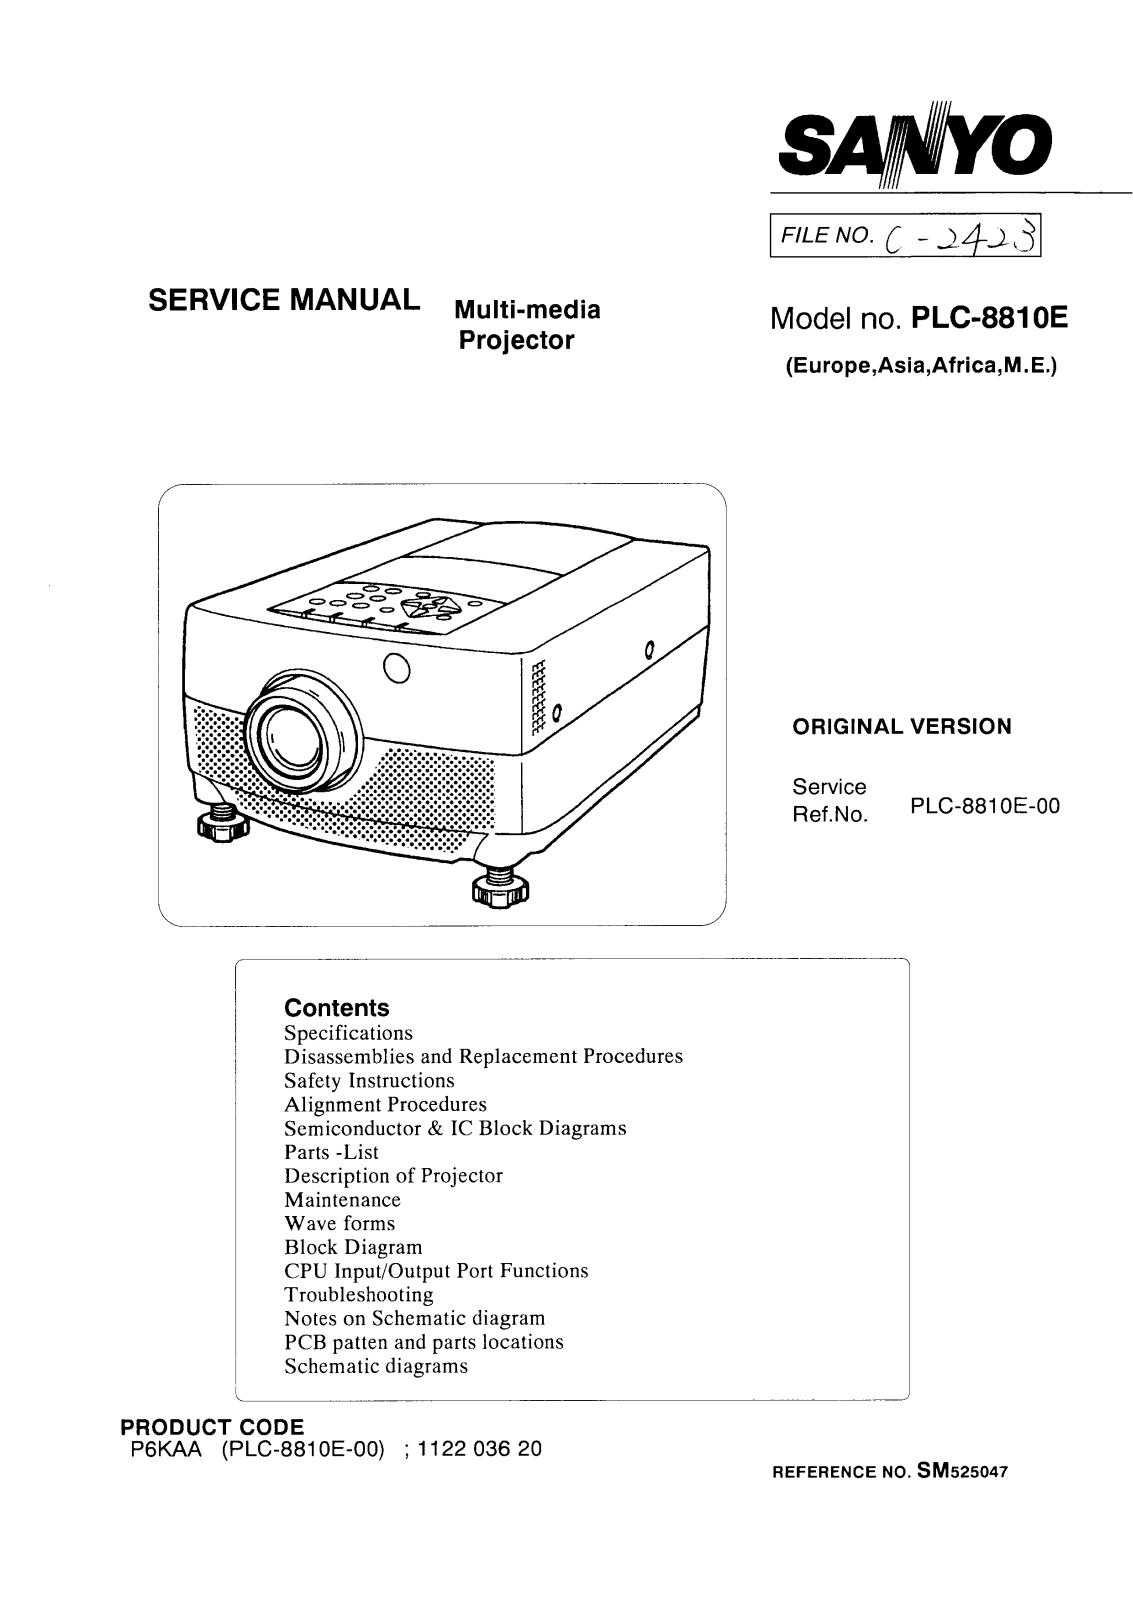 SANYO PLC-8810E Service Manual